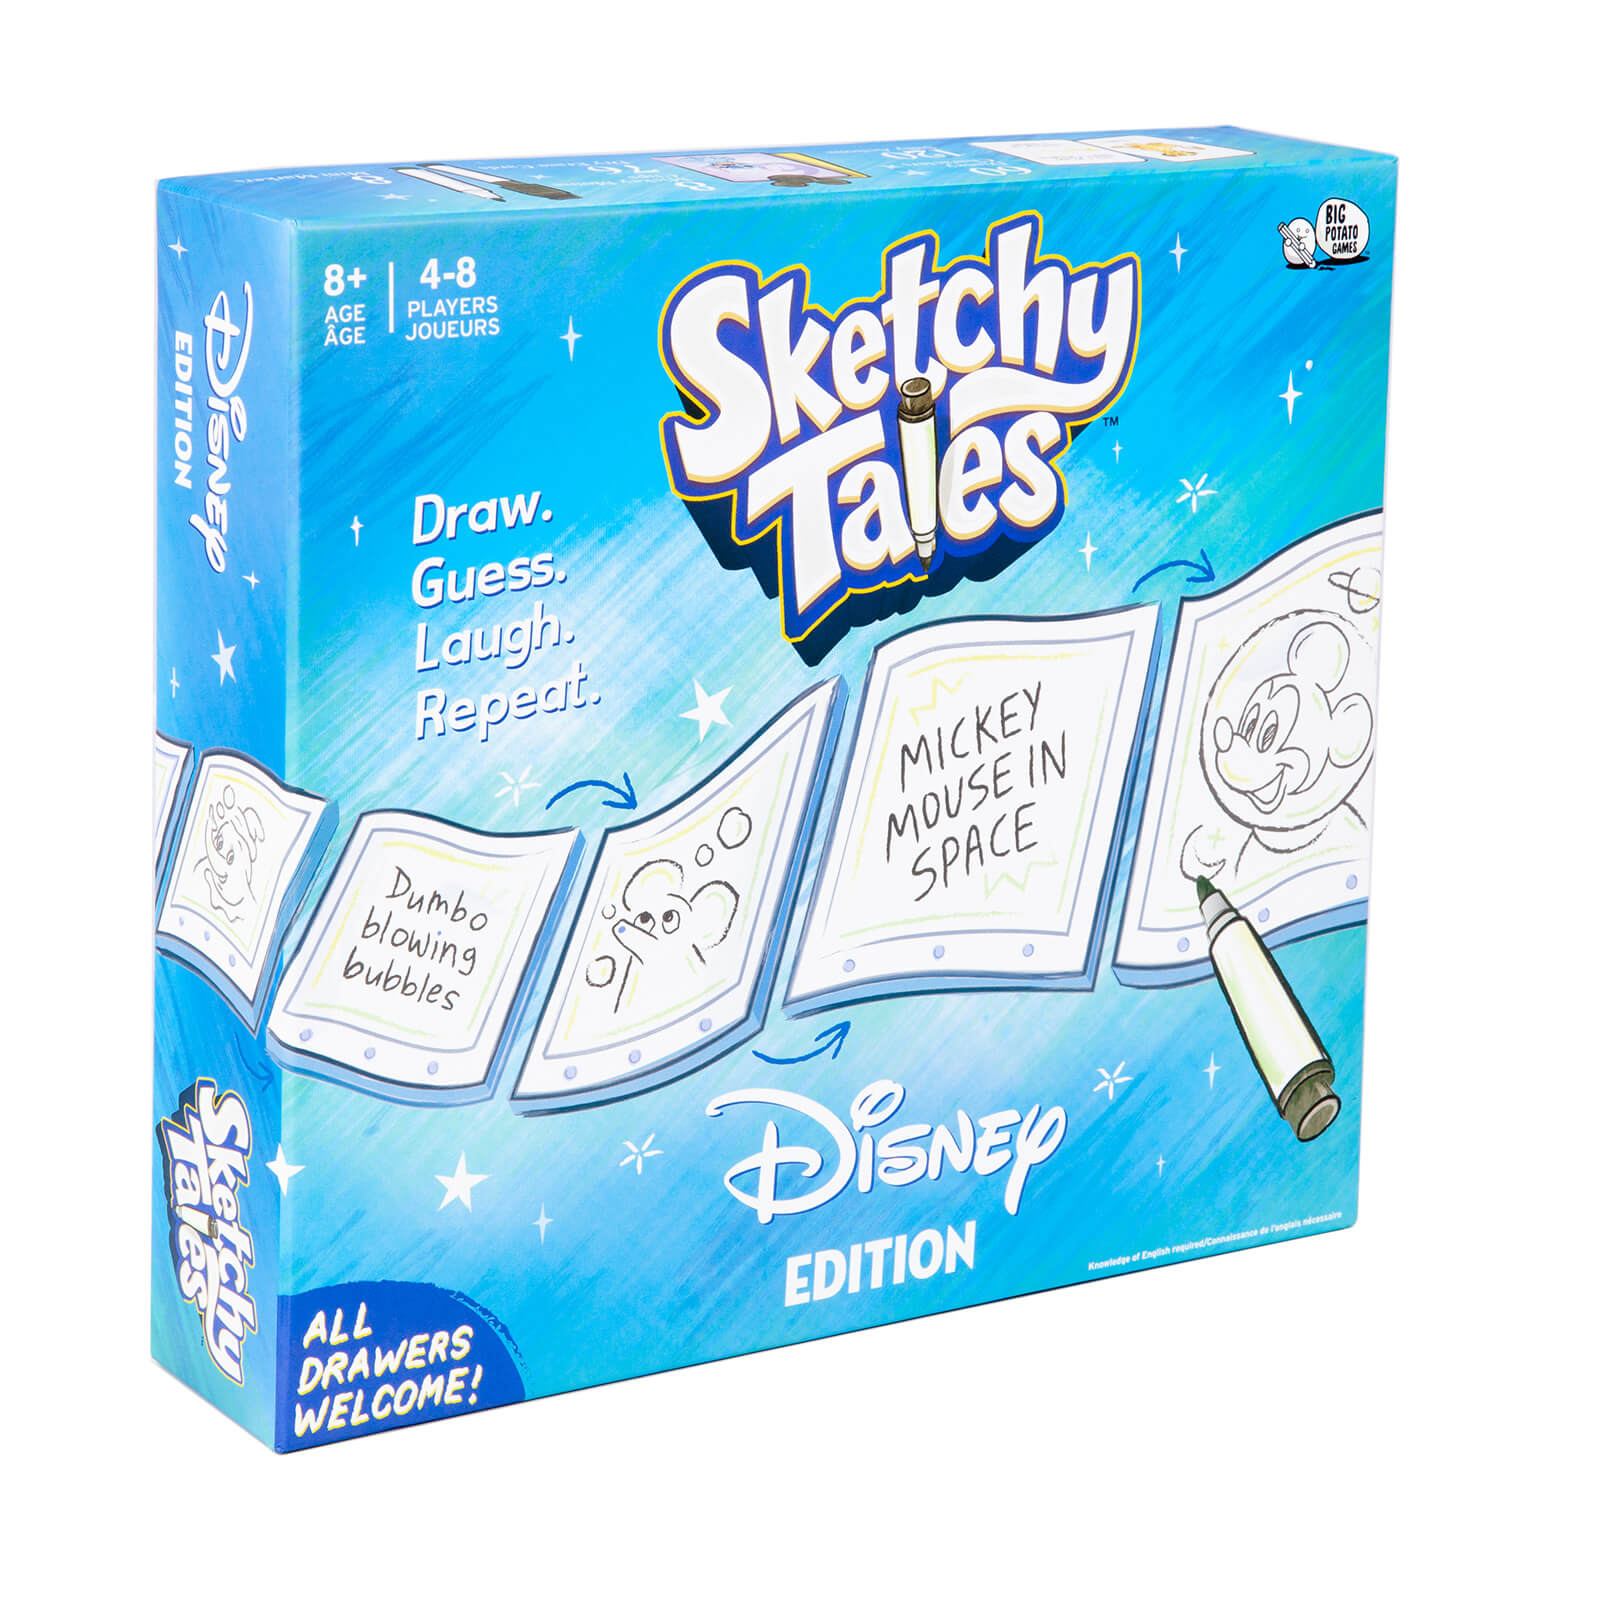 Sketchy Tales Game - Disney Edition